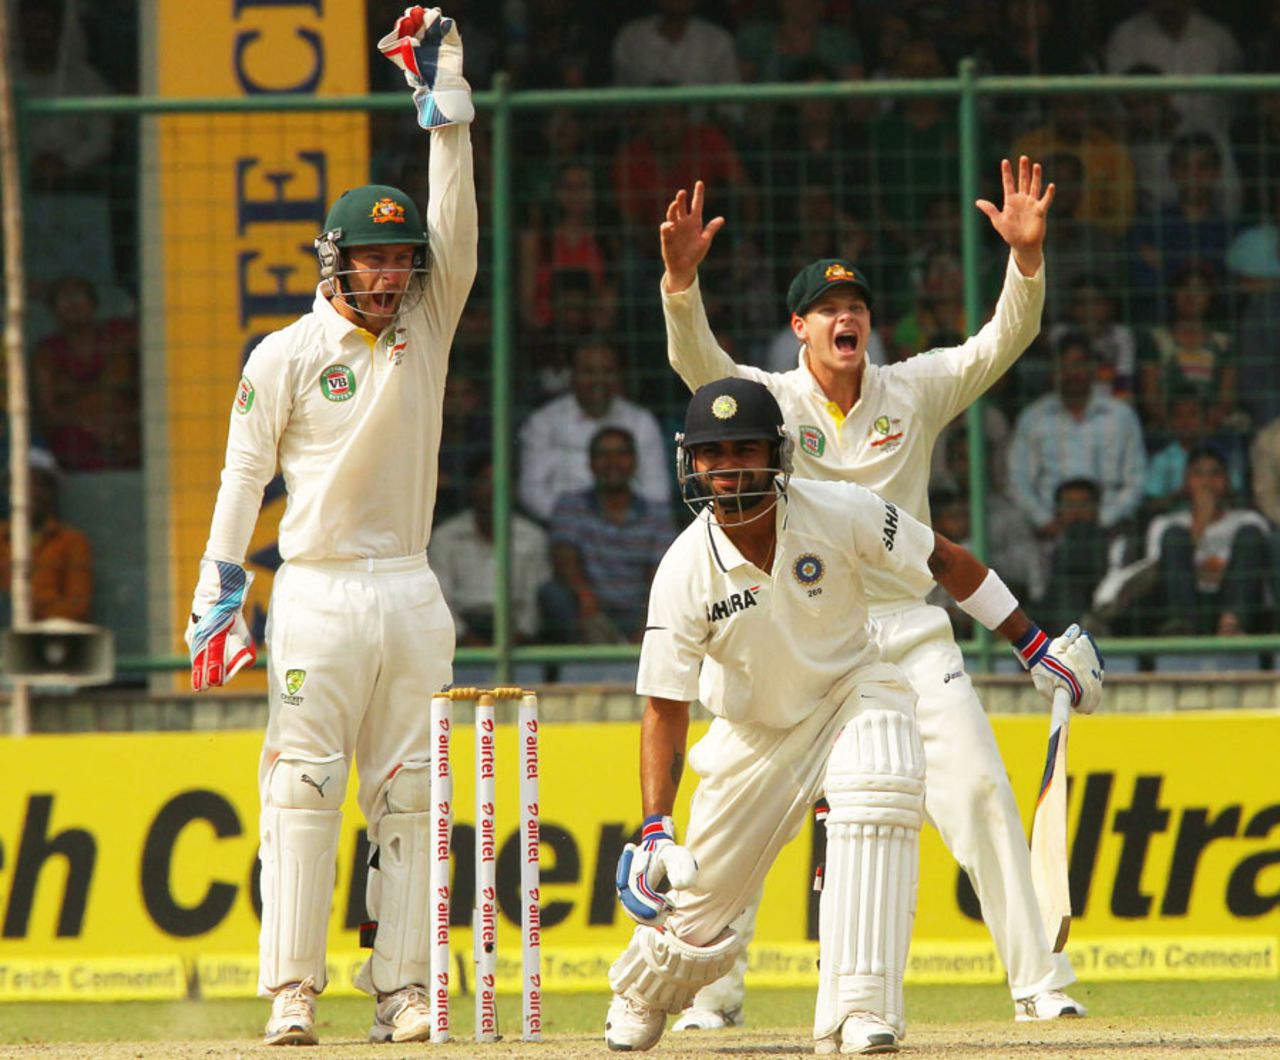 Australia appeal for Virat Kohli's wicket, India v Australia, 4th Test, Delhi, 3rd day, March 24, 2013